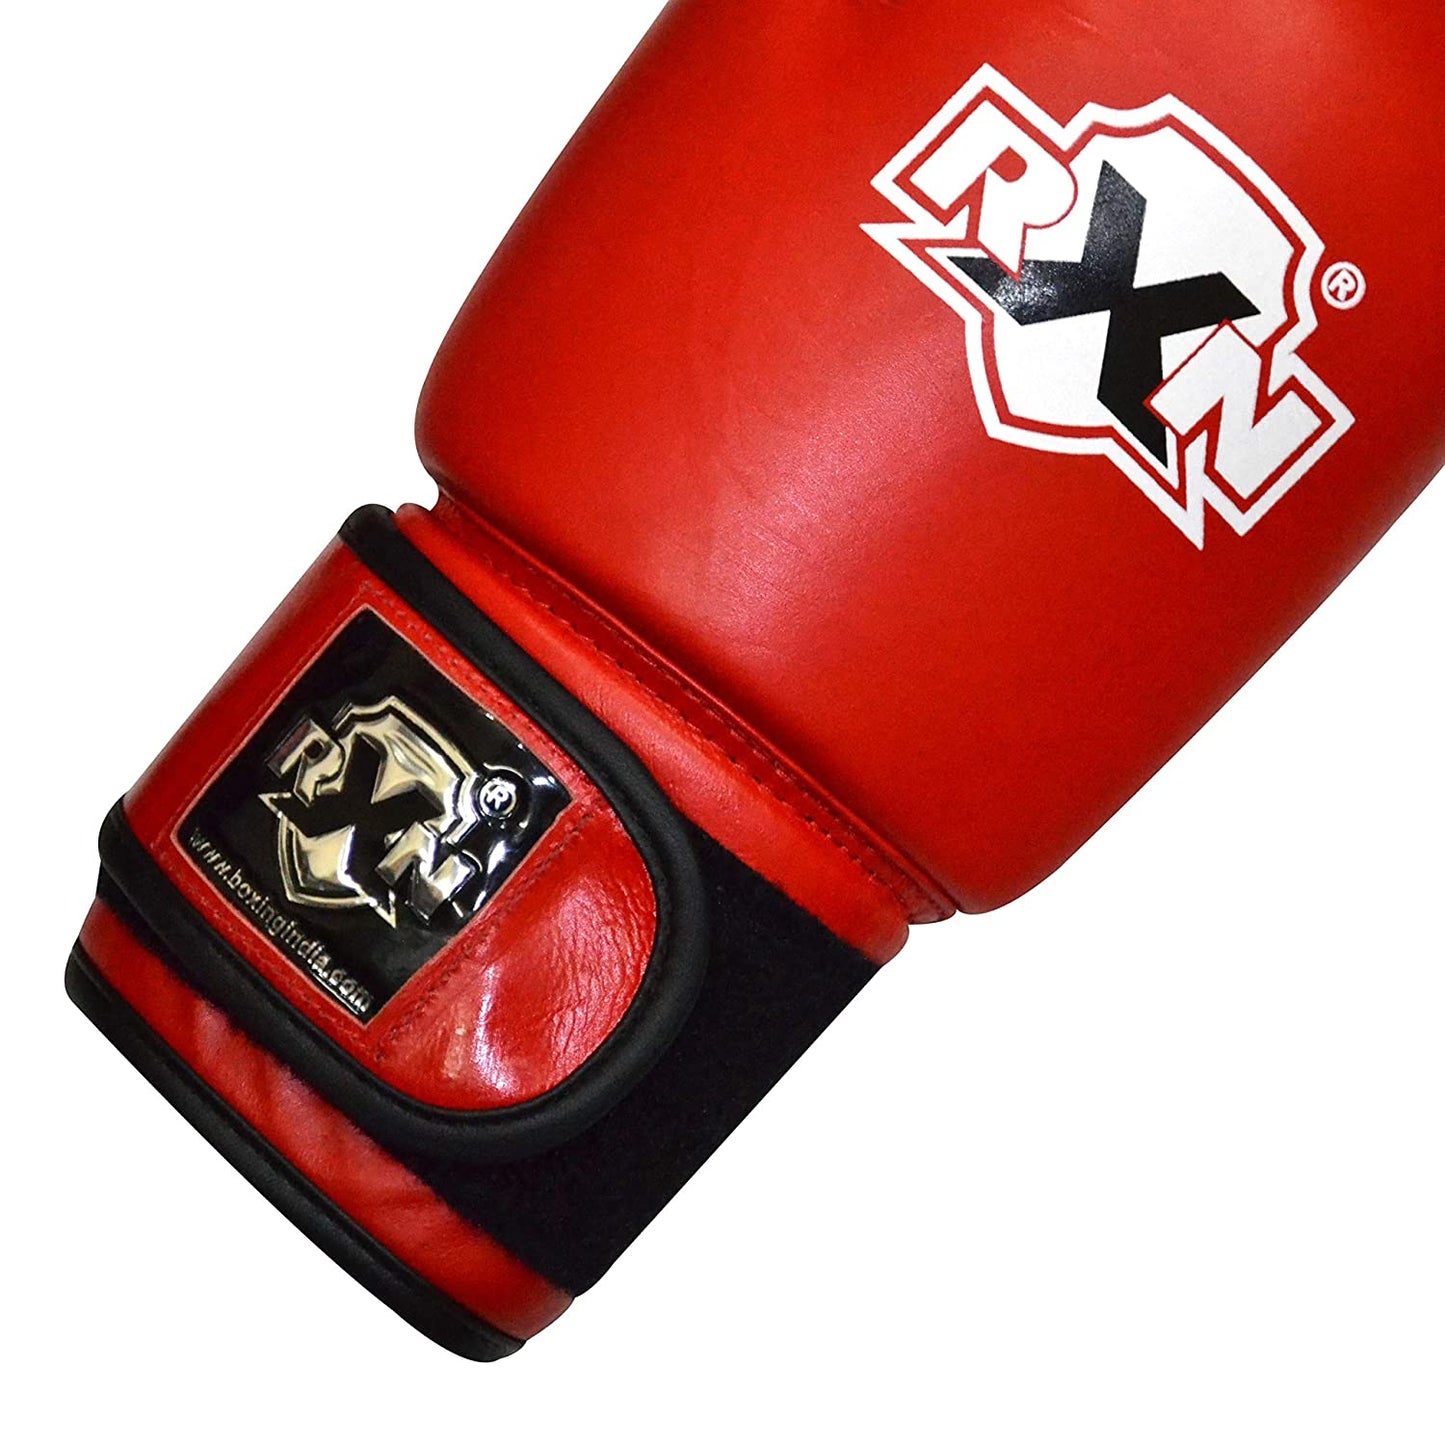 RXN BG-11 Red Boxing Glove